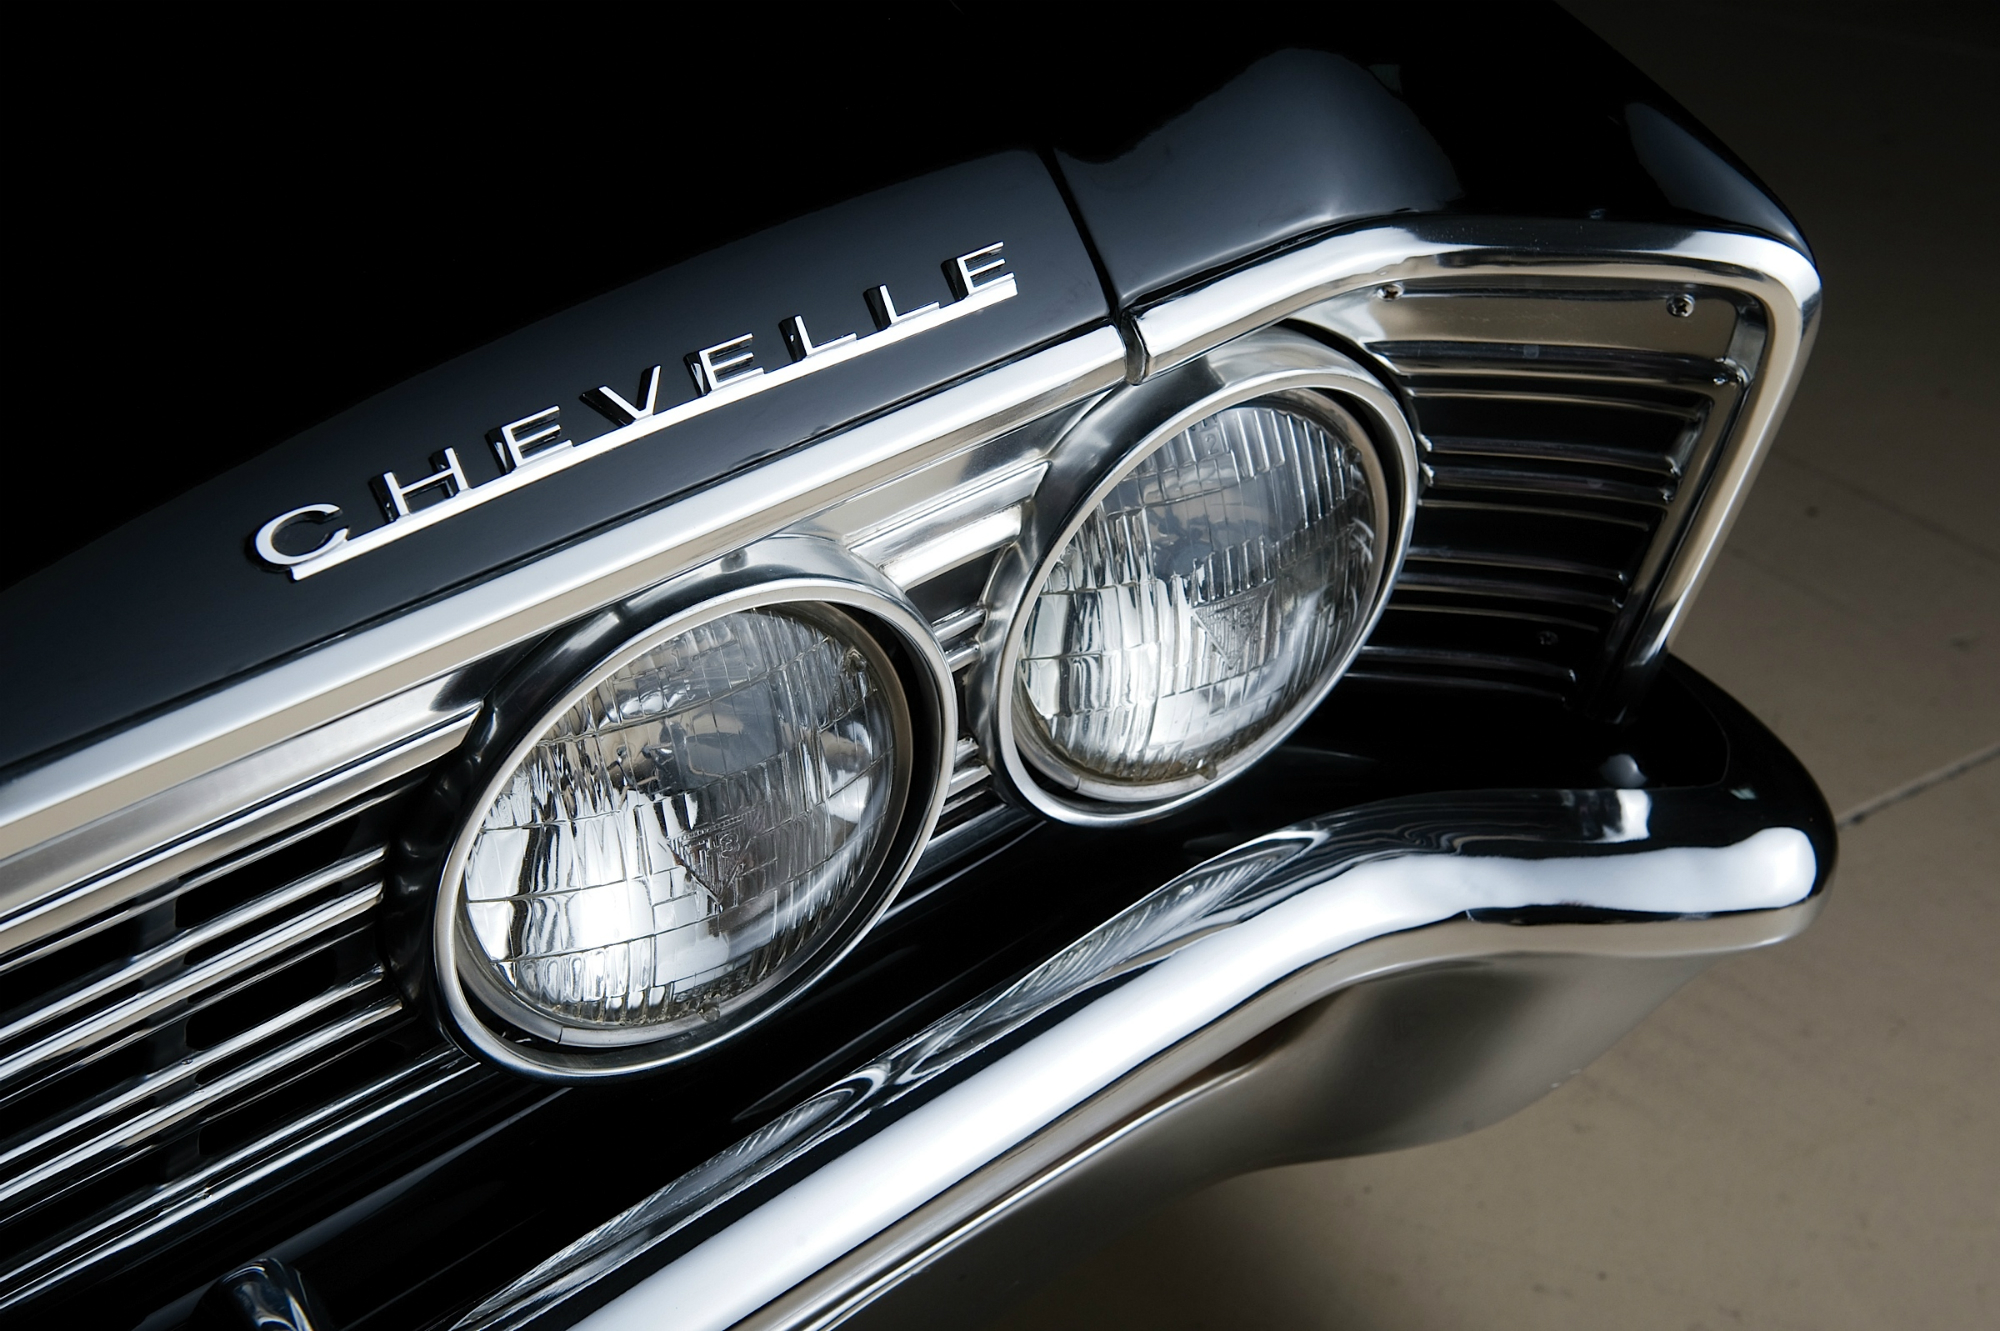 Chevrolet Chevelle malibu SS396 coupe